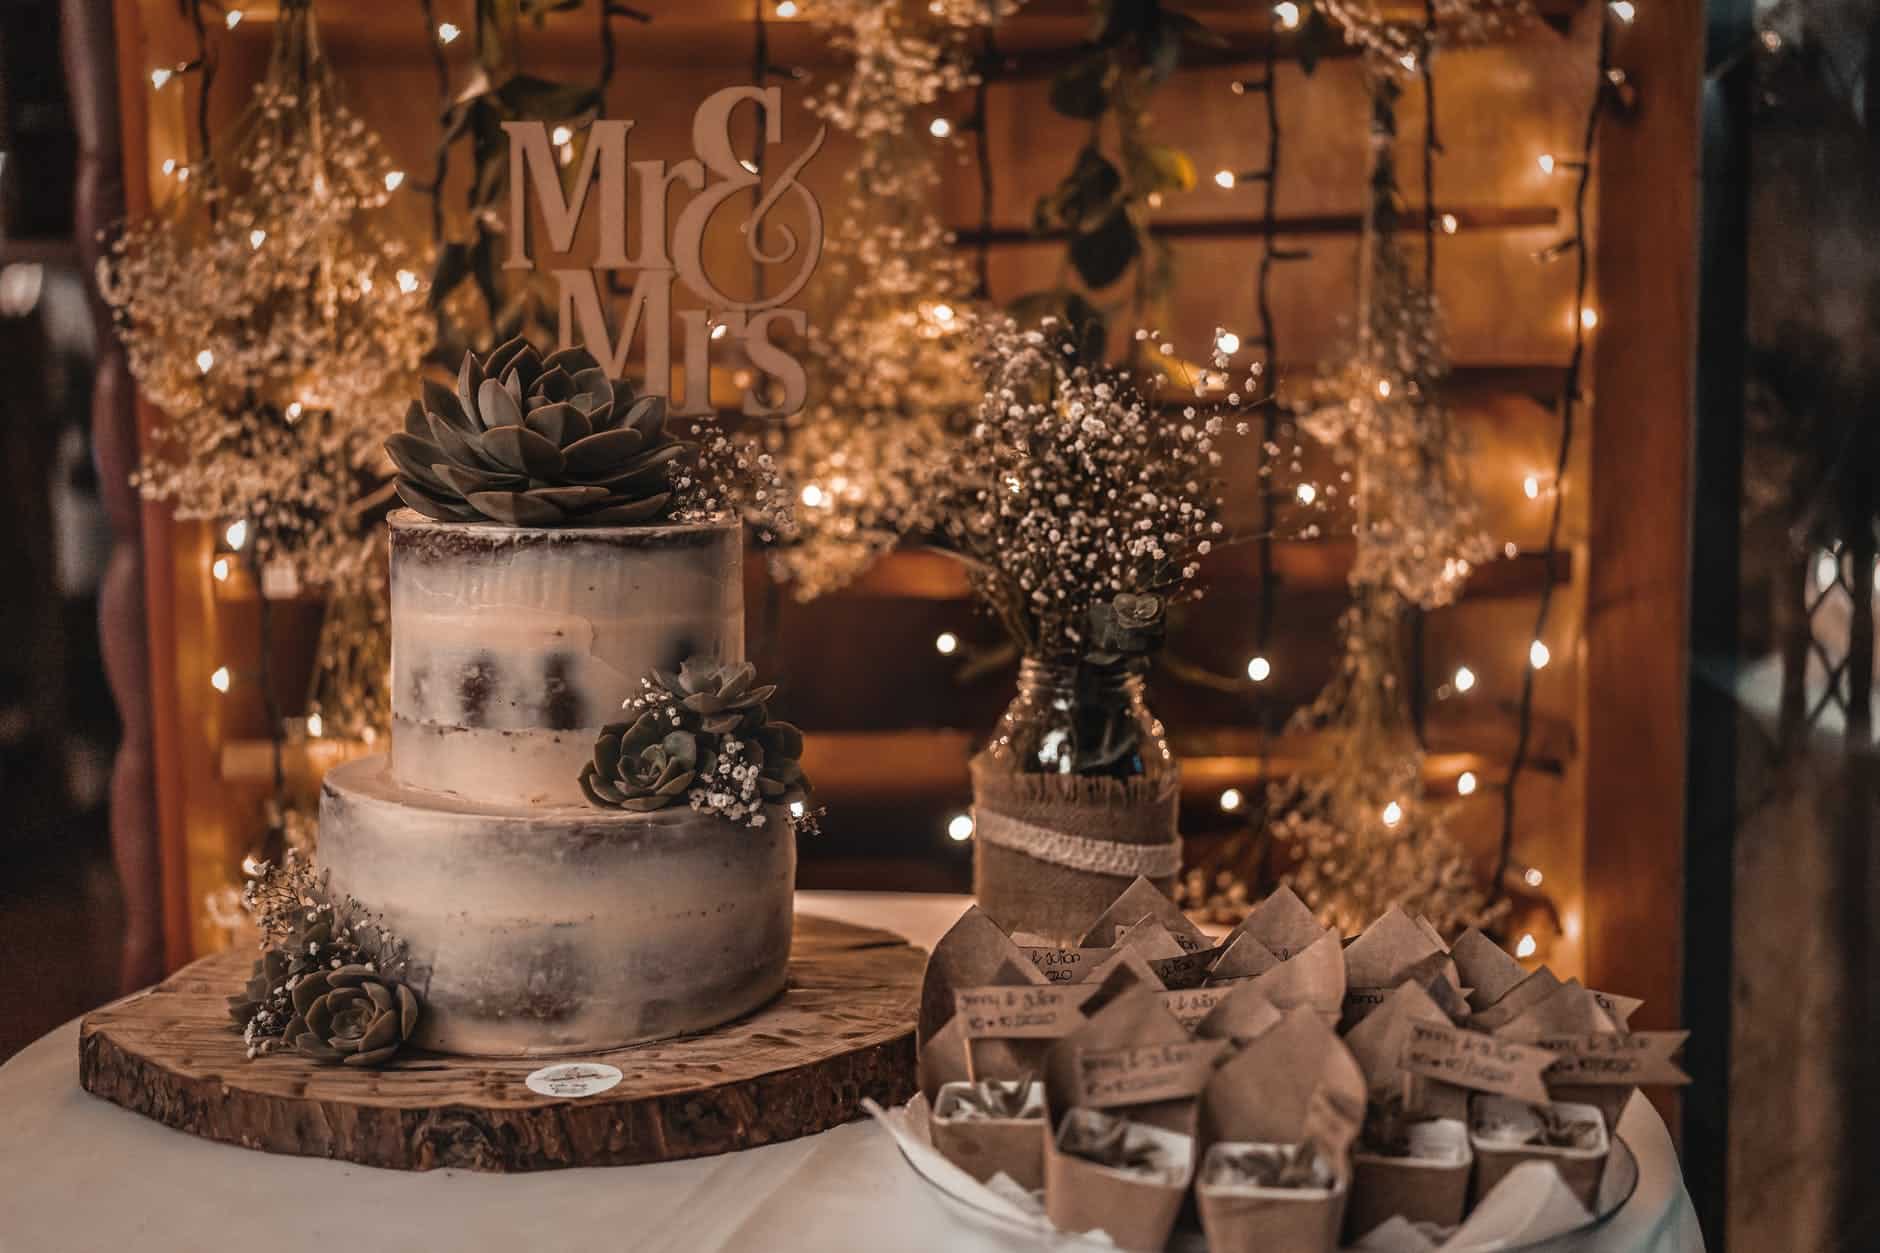 festive wedding cake decorated with chocolate flowers